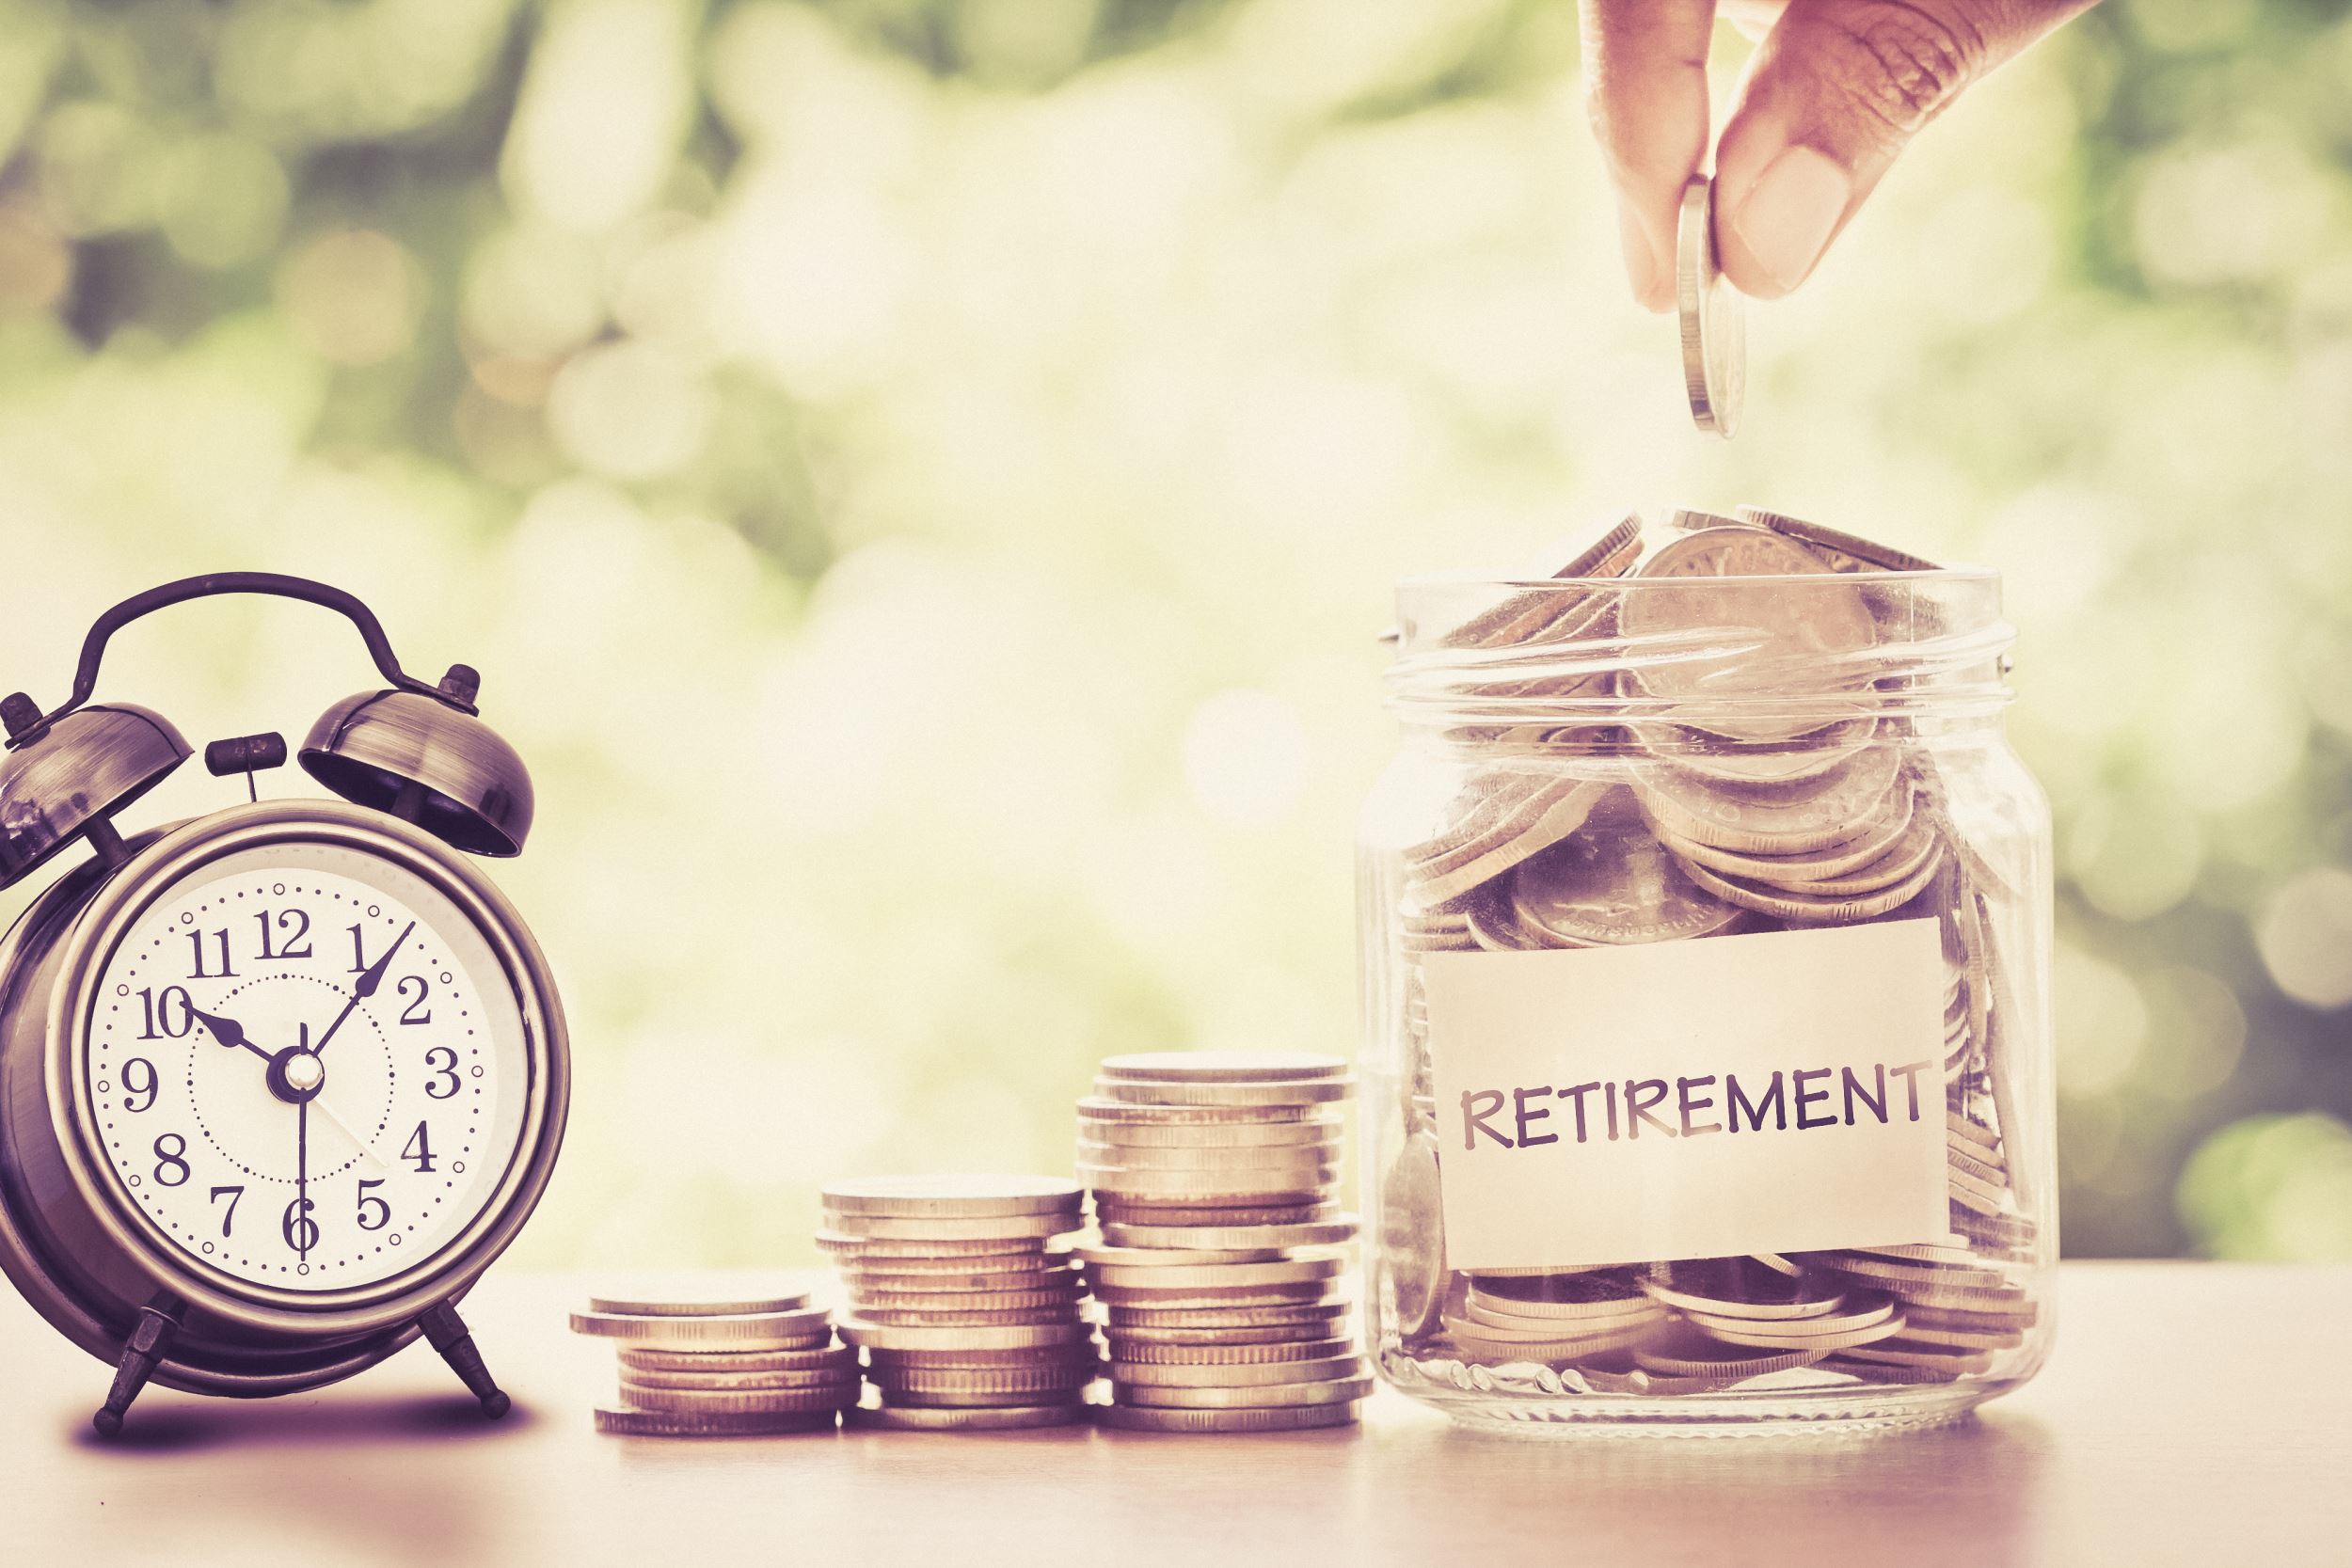 Save for retirement. Money jar